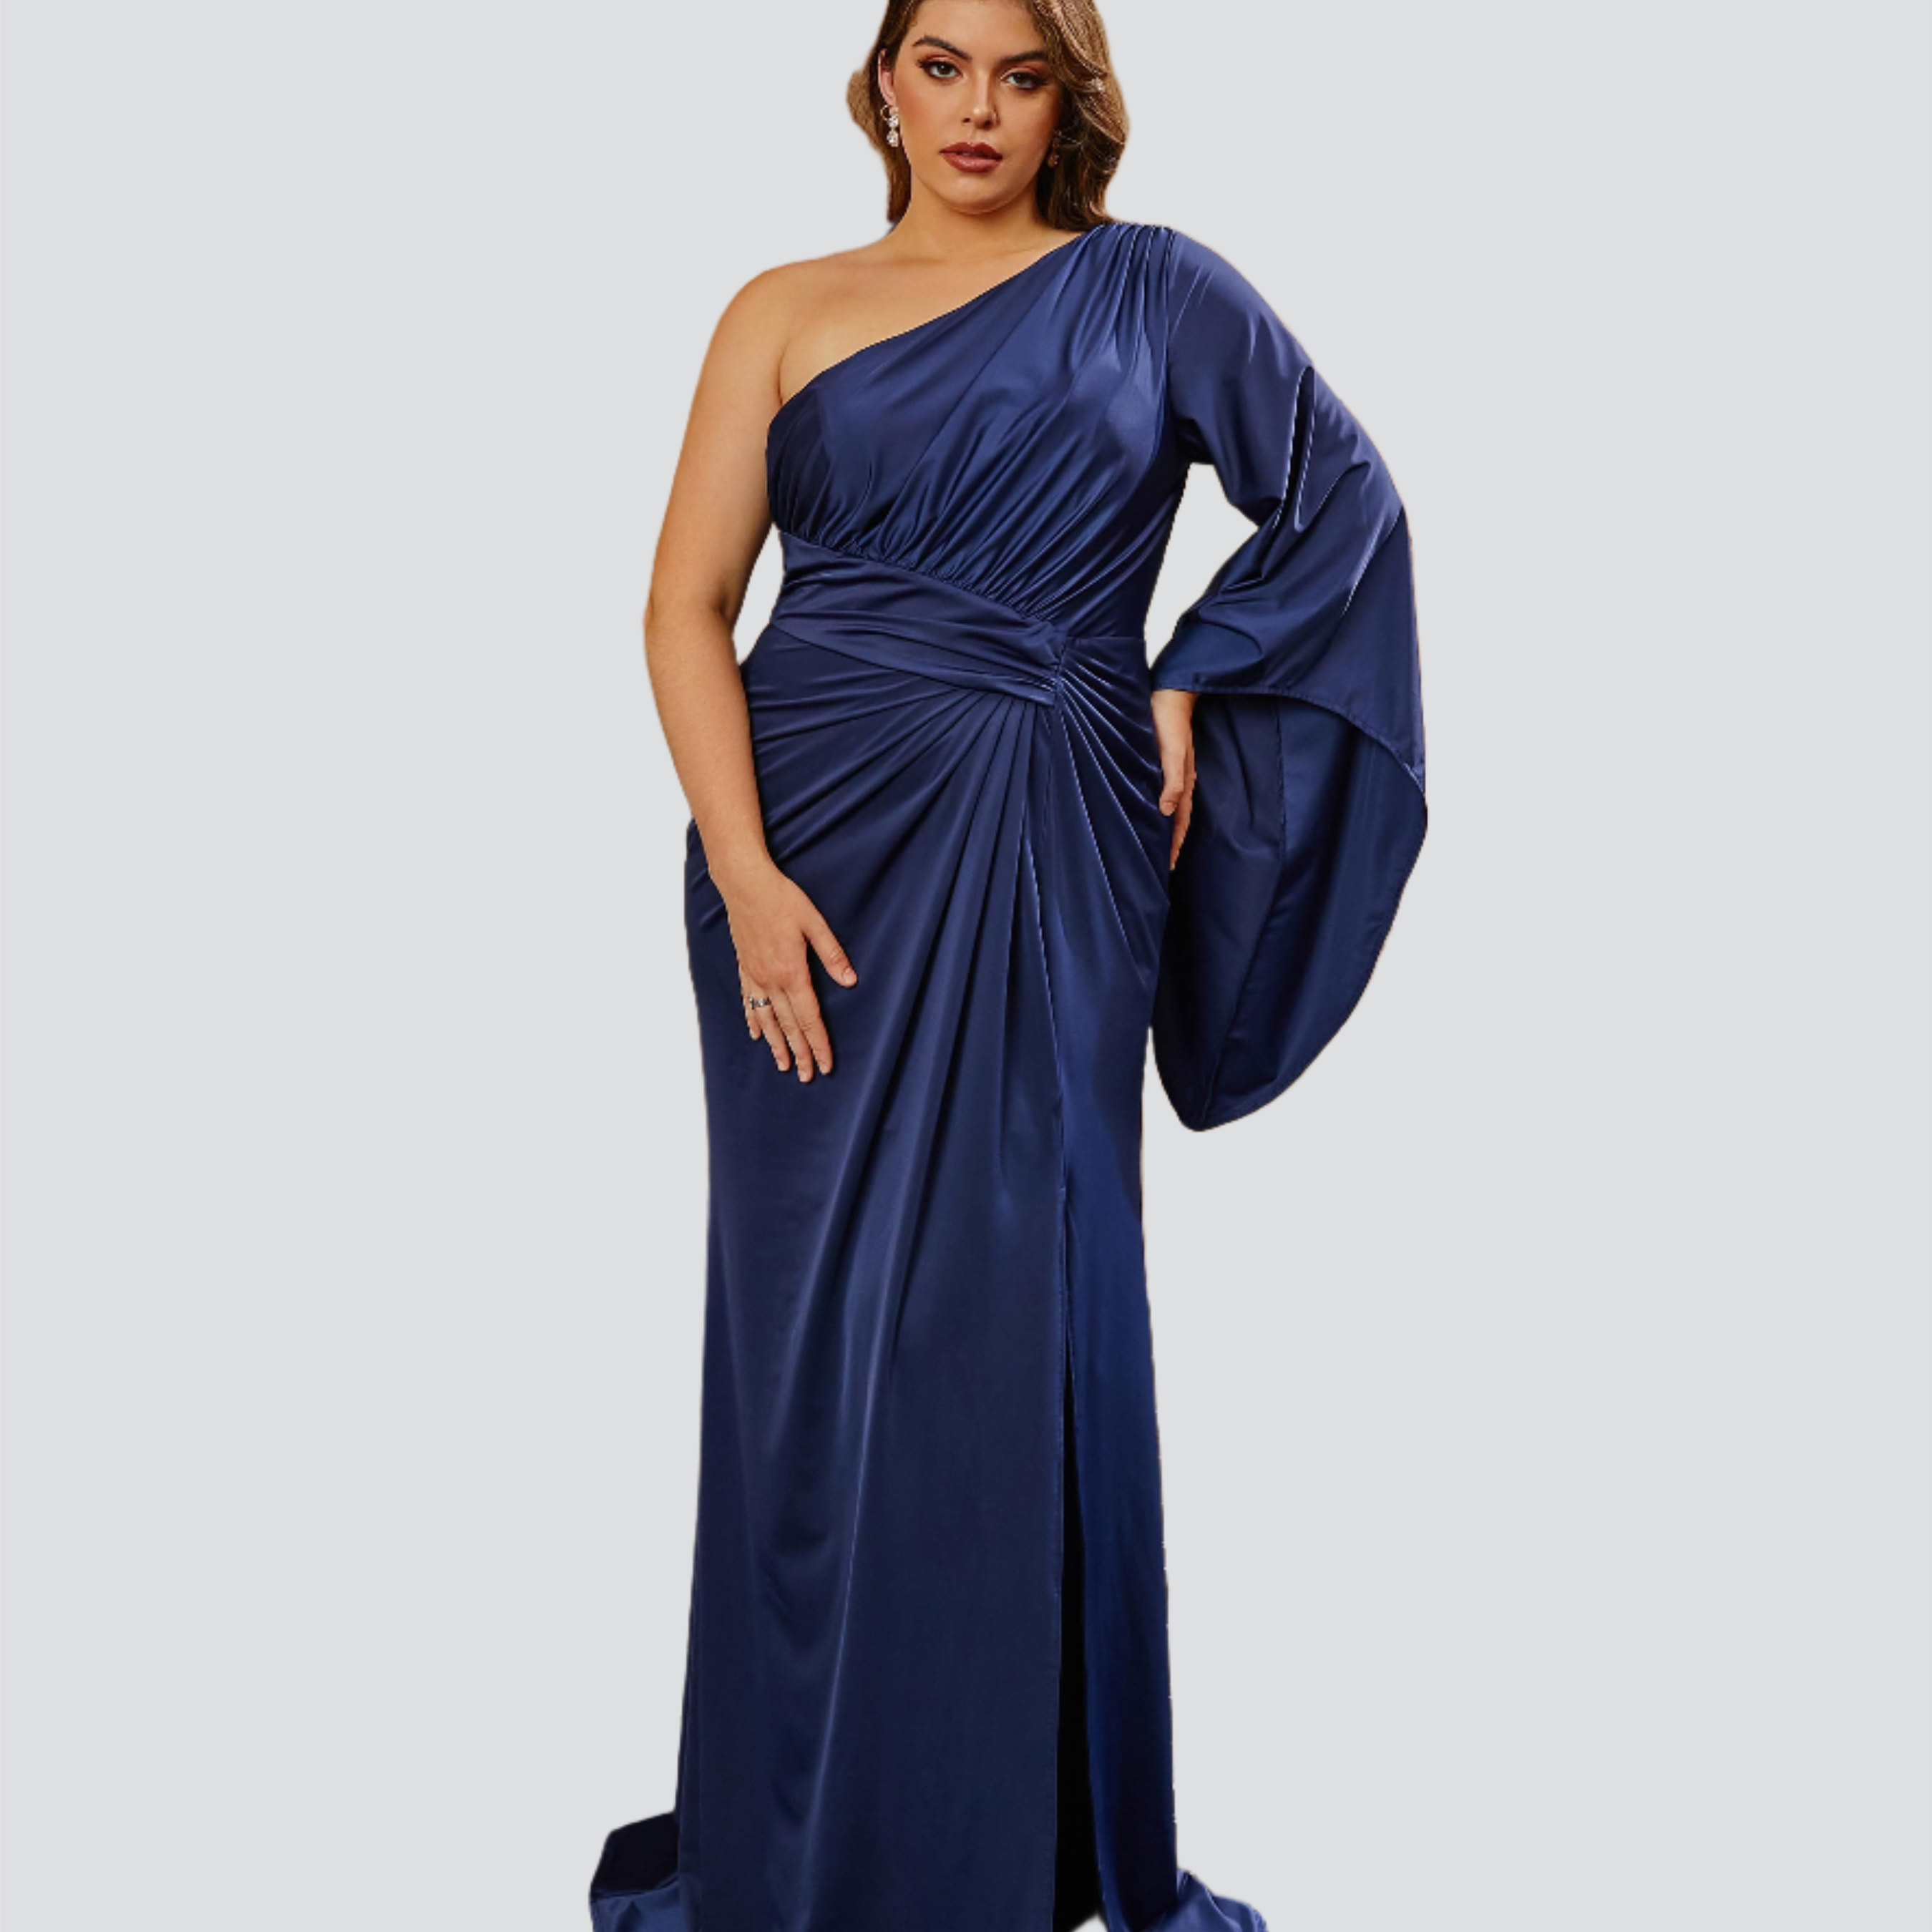 Plus Size One Shoulder Folds Prom Dress